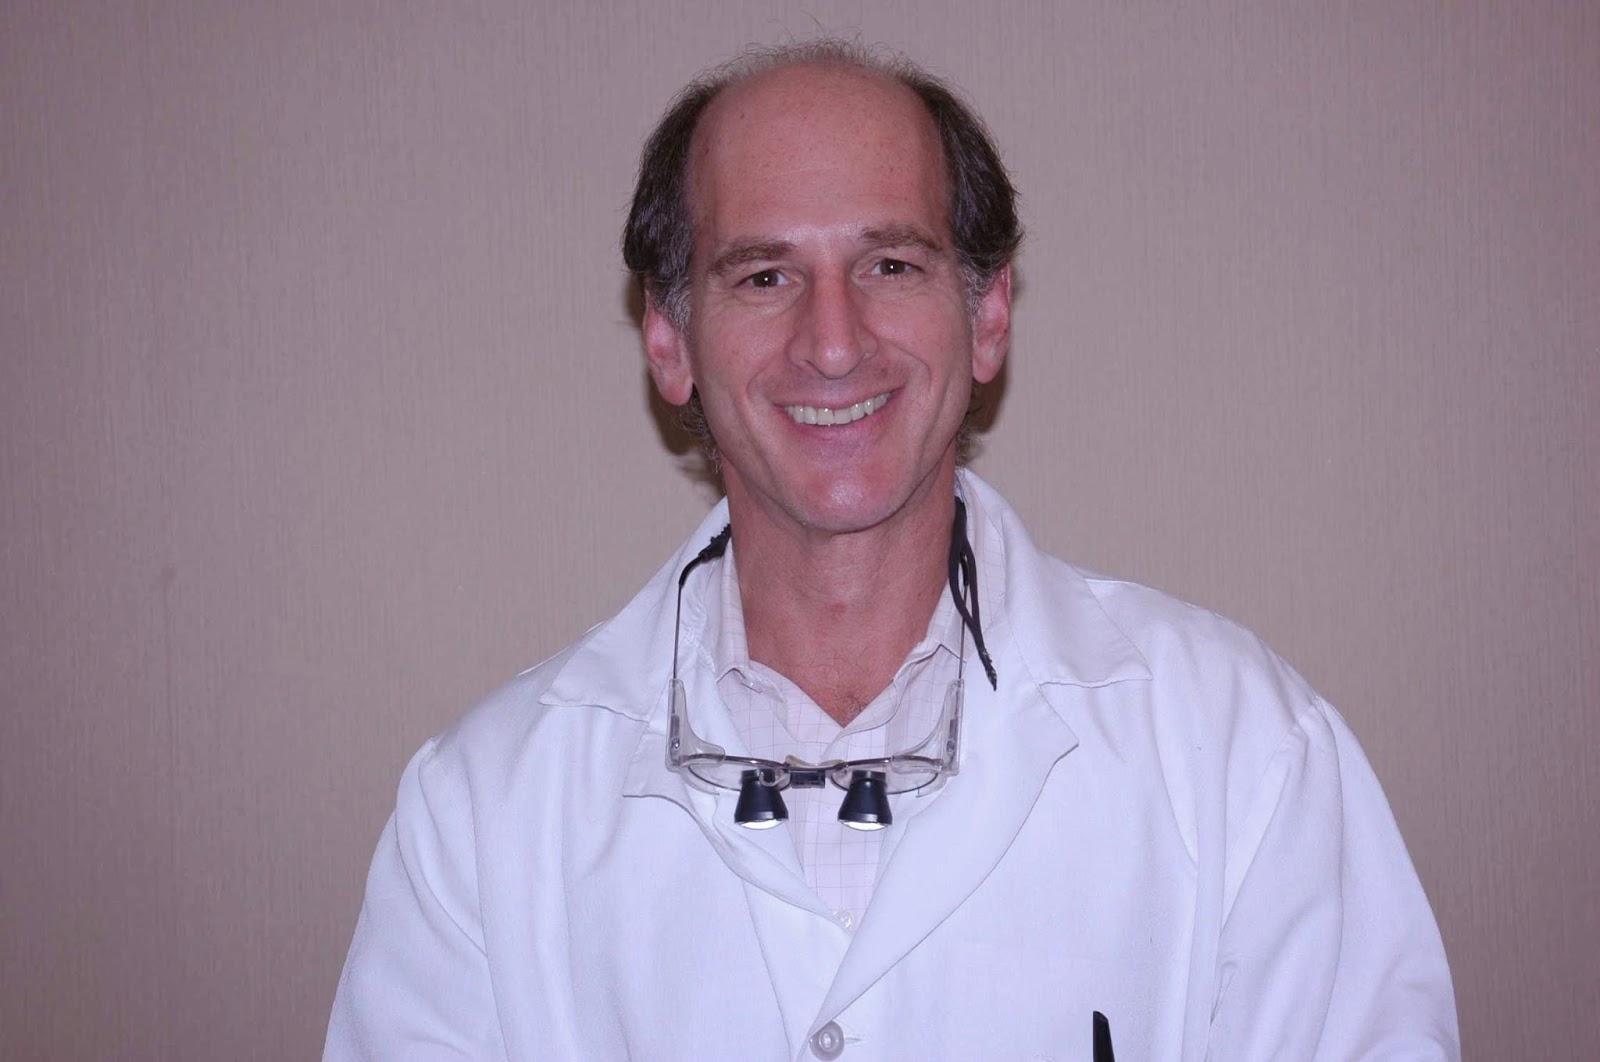 Photo of Dr. Schwarzbaum Len DDS in Queens City, New York, United States - 3 Picture of Point of interest, Establishment, Health, Dentist